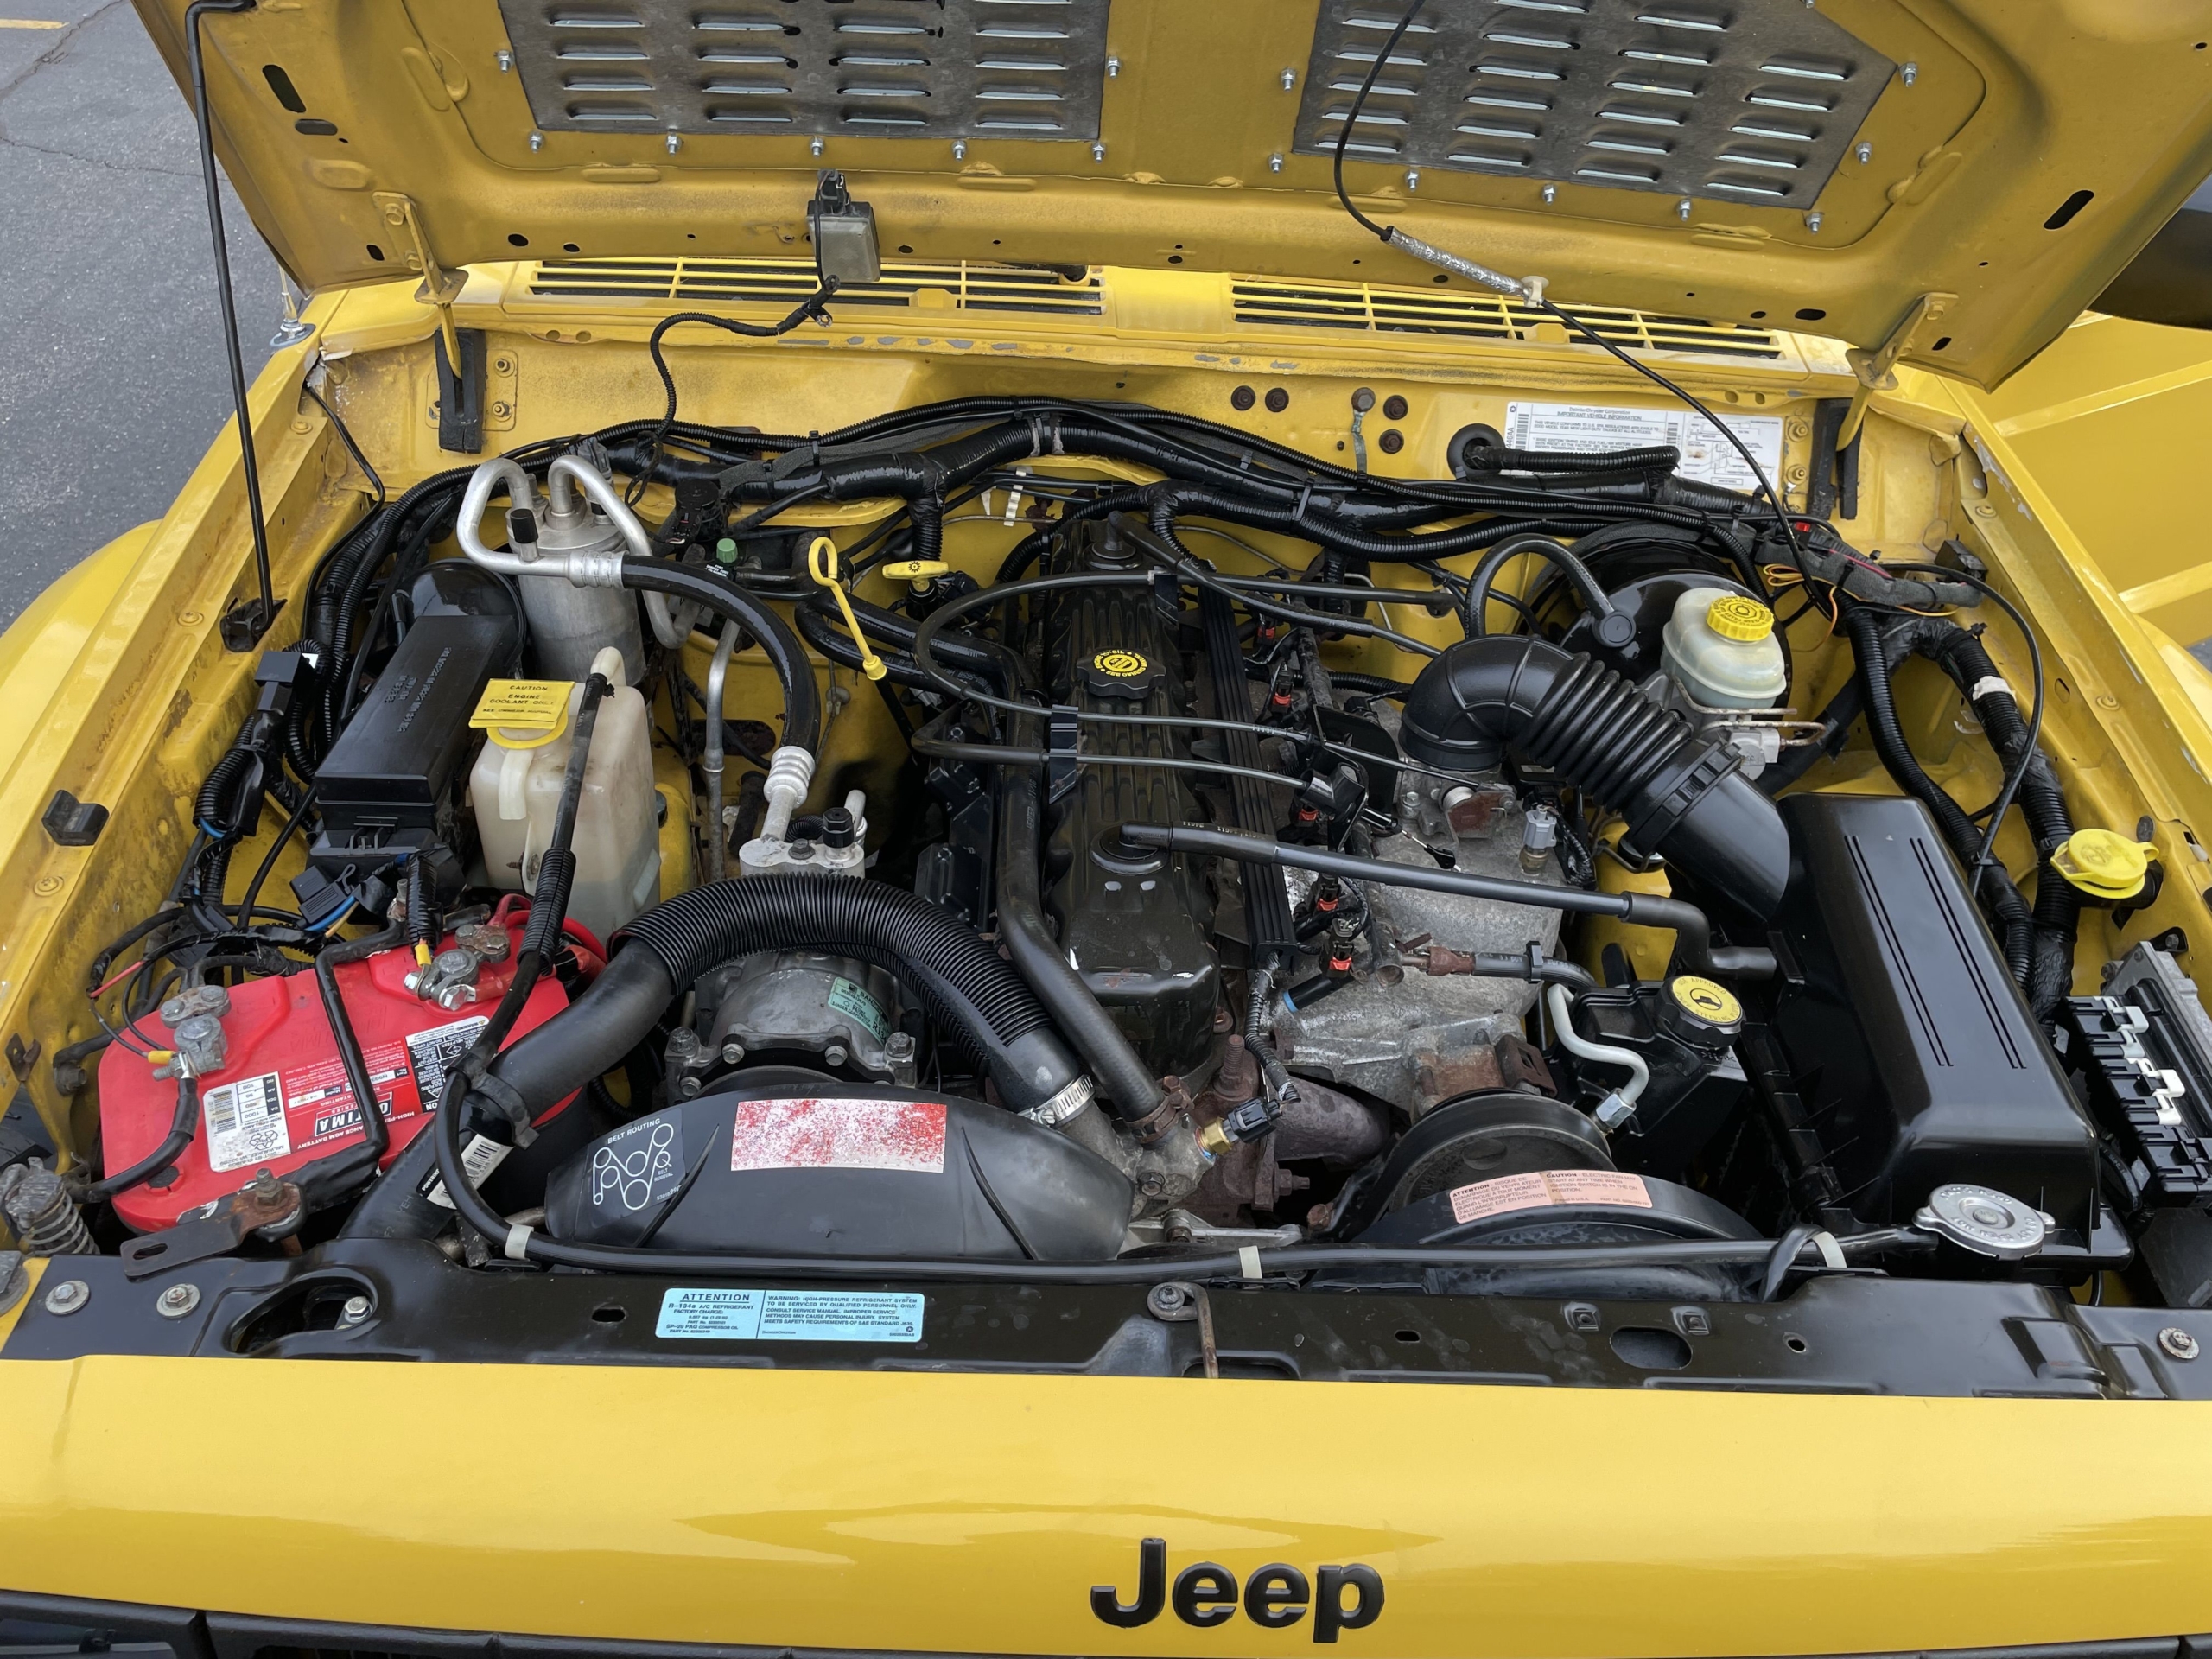 2000-jeep-xj-solar-yellow-4x4-build-for-sale-27